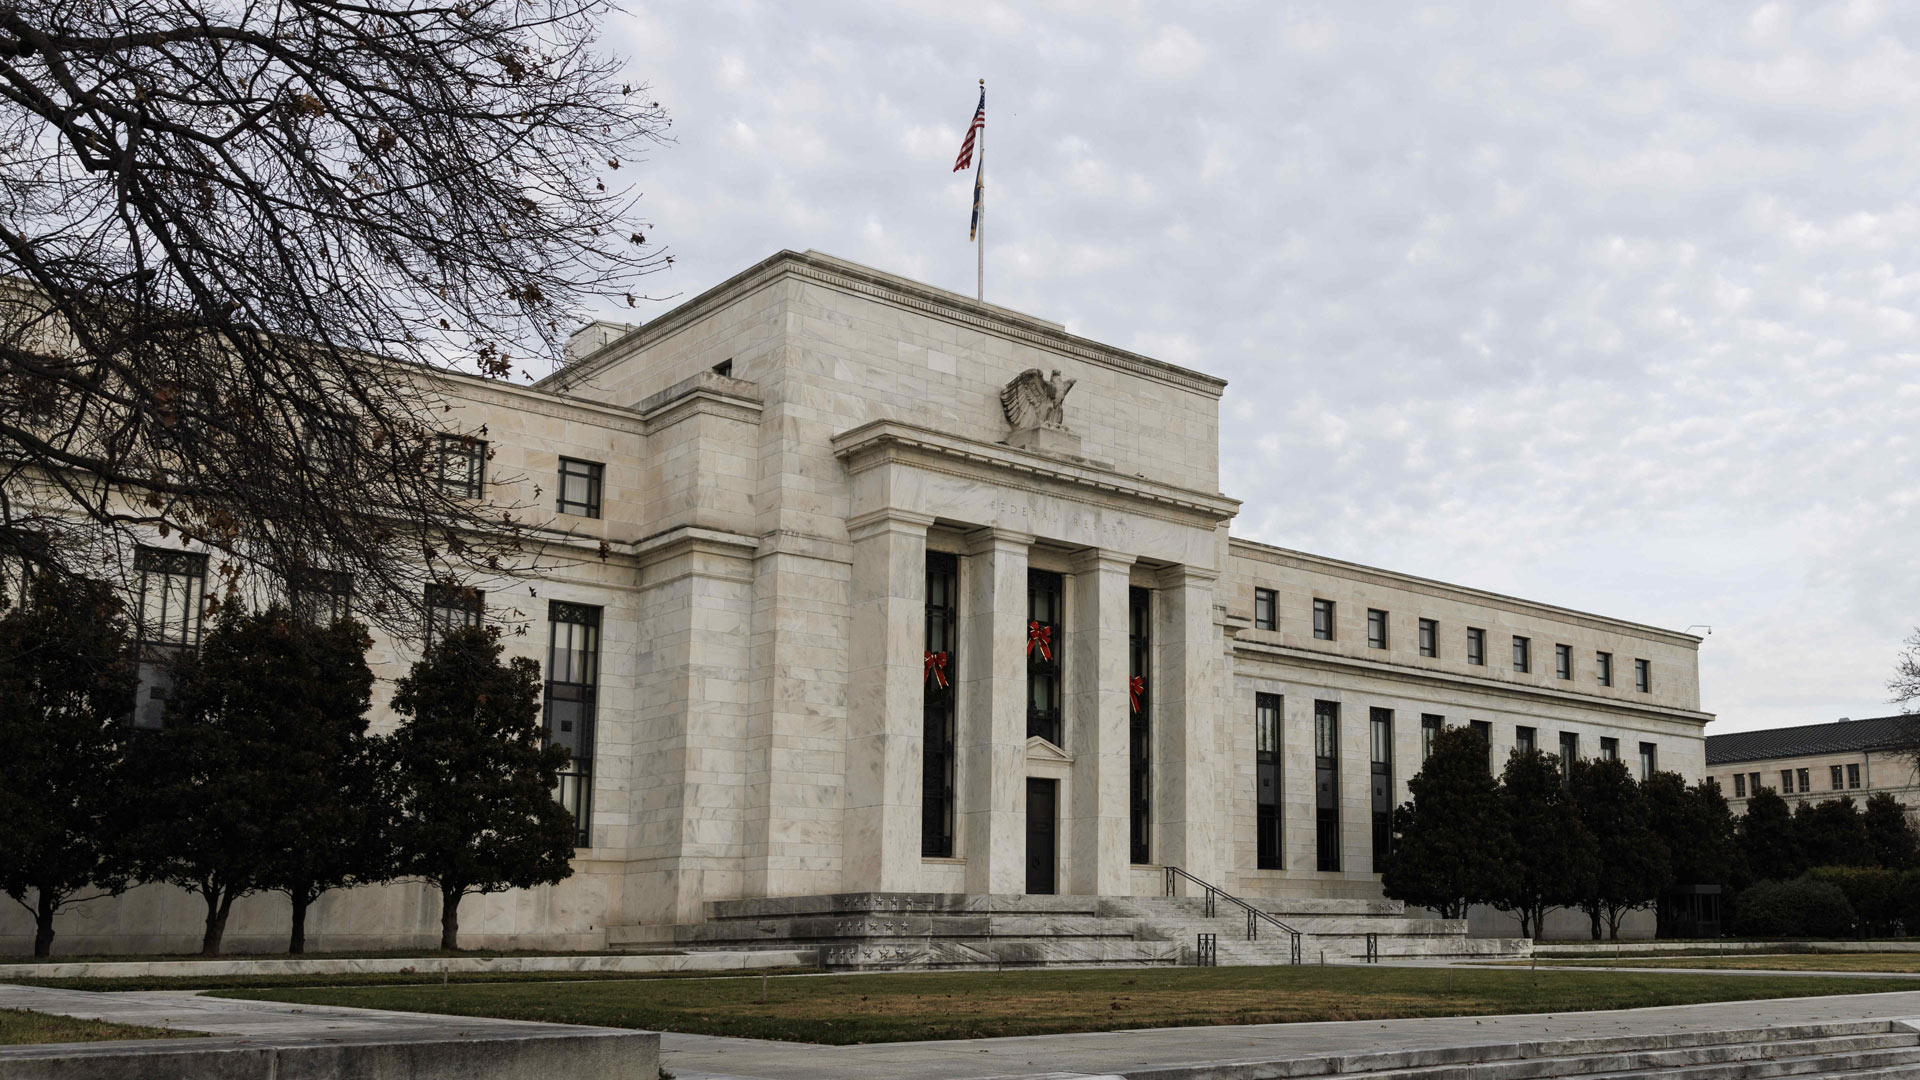 Federal Reserve Bank, Washington, USA | picture alliance/dpa/XinHua